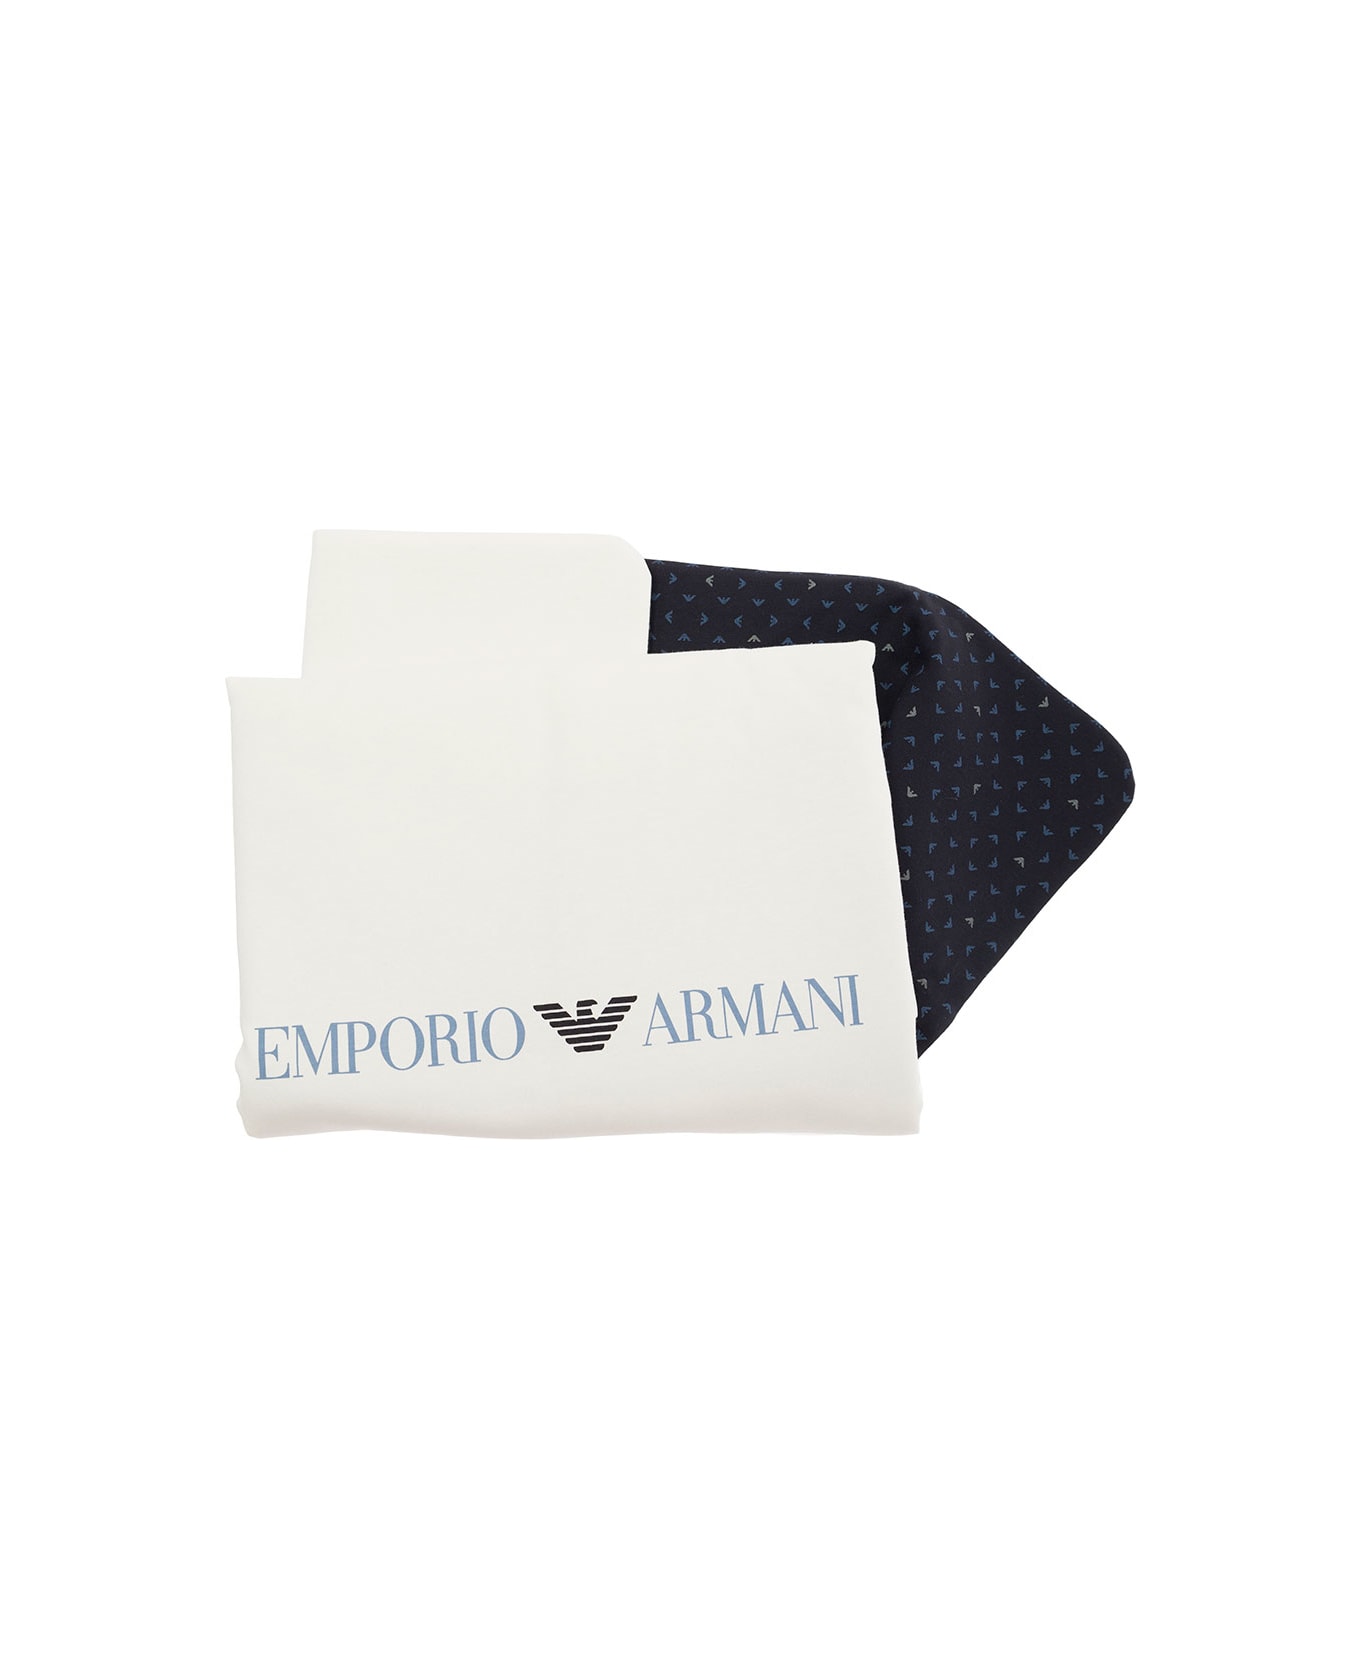 Emporio X8X106 Armani White Blanket With Contrasting Logo Detail In Cotton - Blu